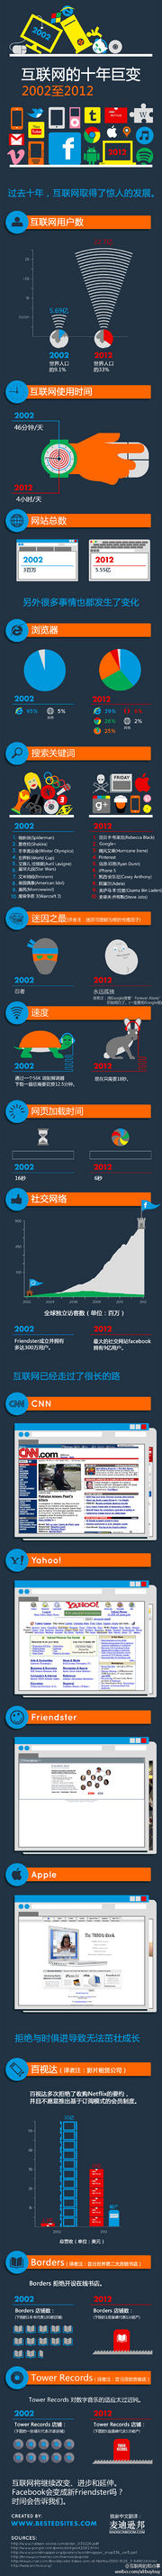 Internet-2002-to-2012.jpg